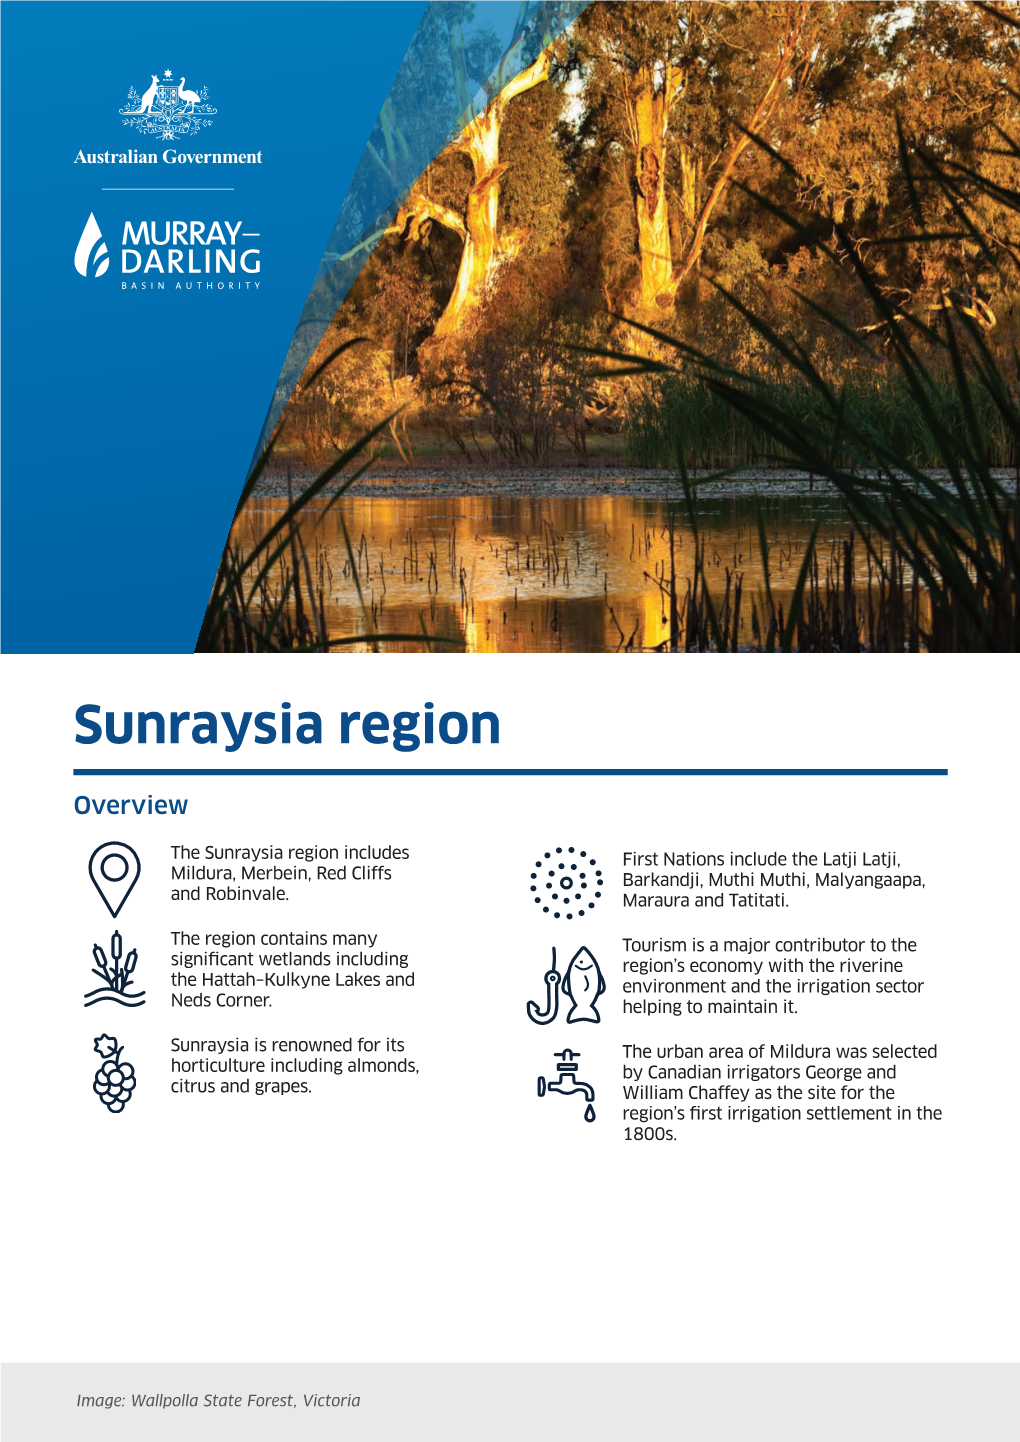 Murray-Darling Basin Authority Regional Fact Sheet for Sunraysia